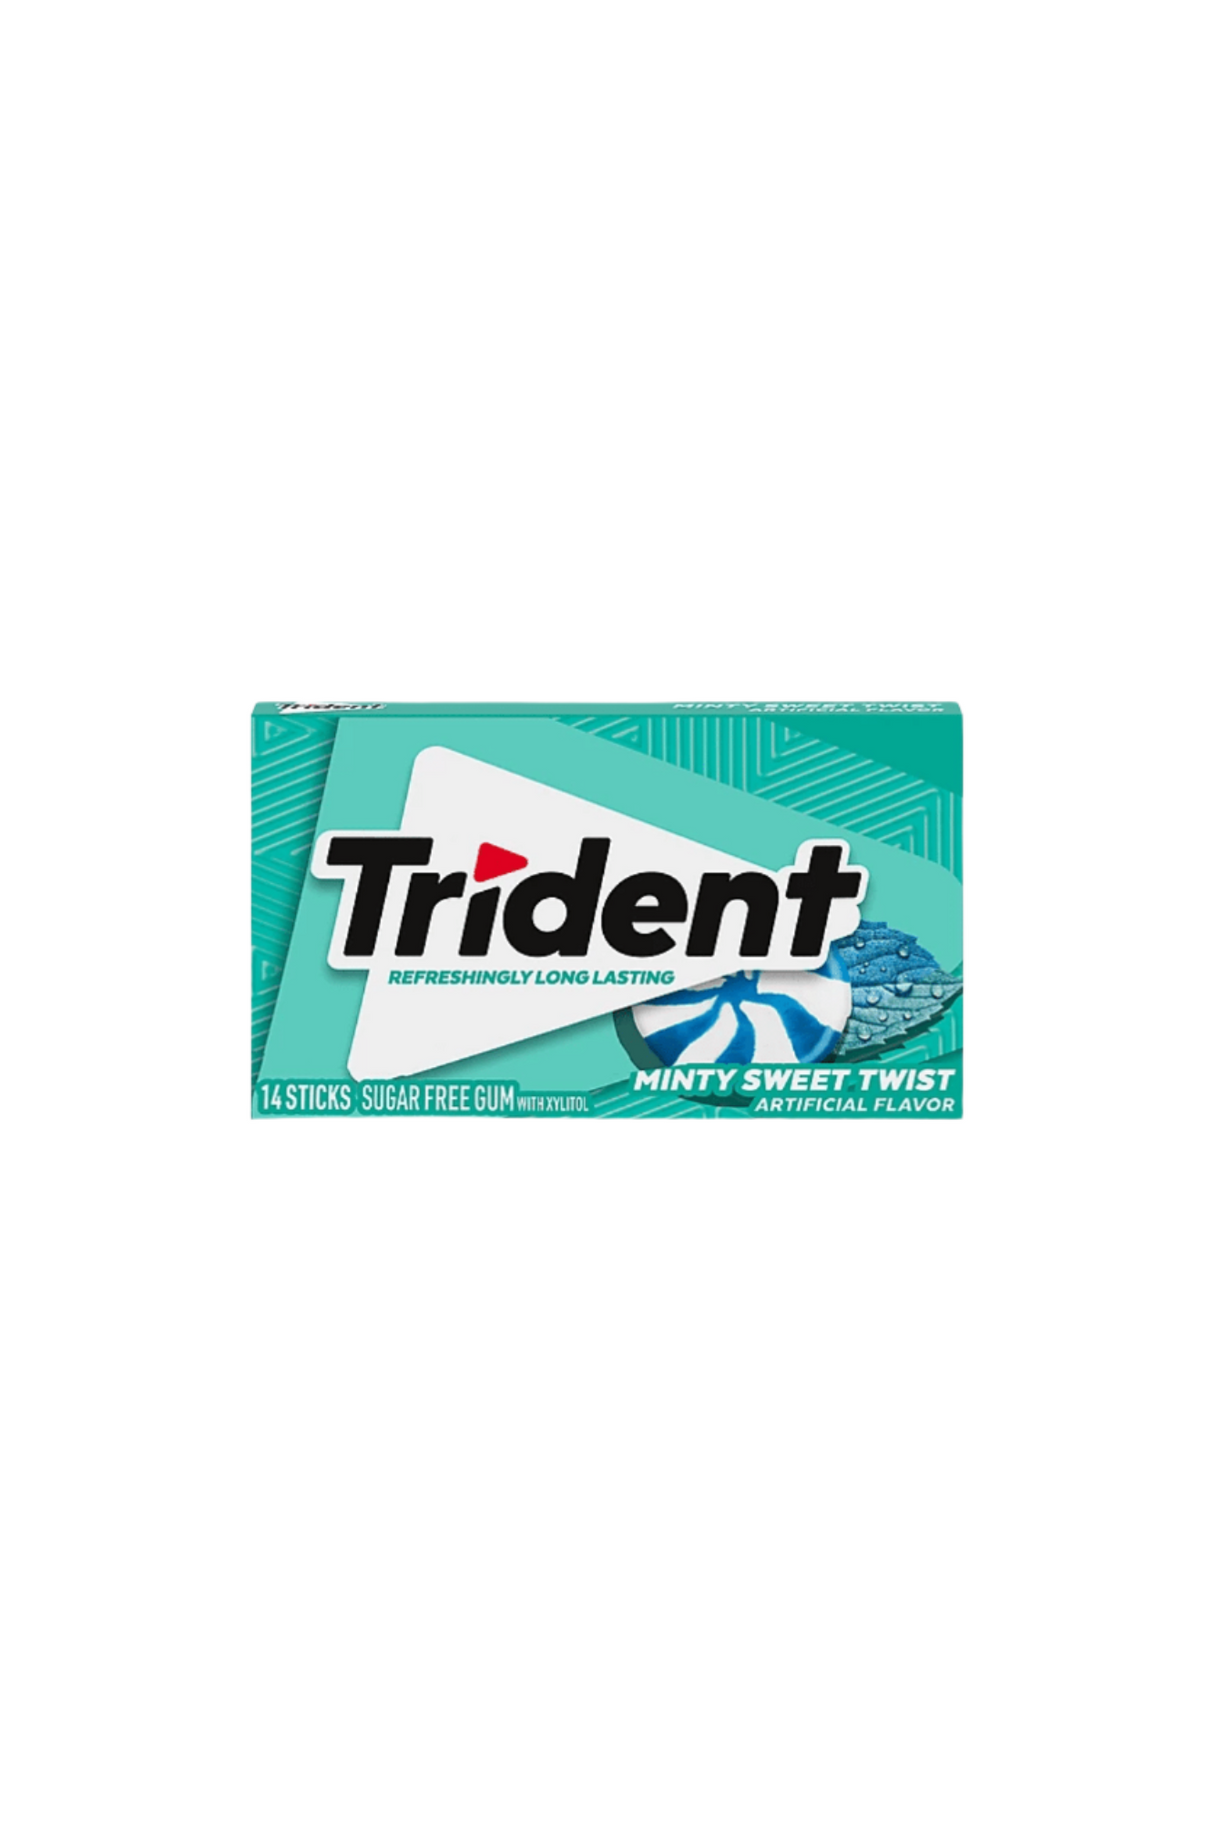 trident gum minty sweet twist 14 sticks sugar free